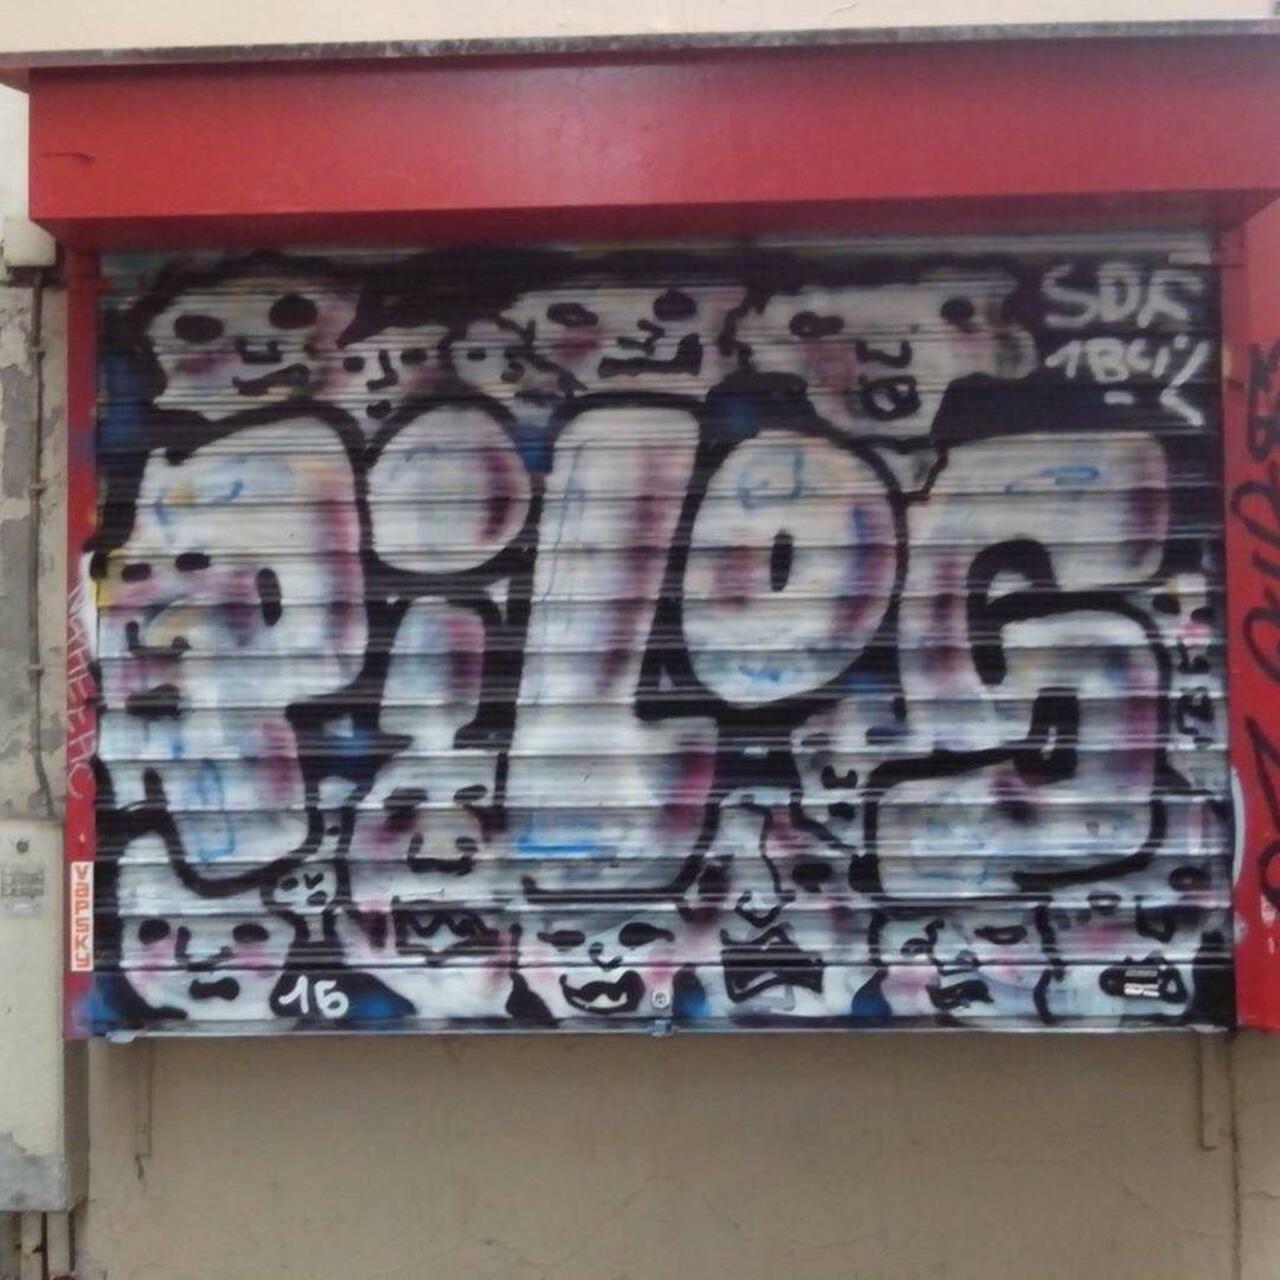 RT @StArtEverywhere: #streetart #streetarteverywhere #streetshot #graffitiart #graffiti #arturbain #urbanart #rideaudefer #stencil #spra… http://t.co/QQOVmg60Jz